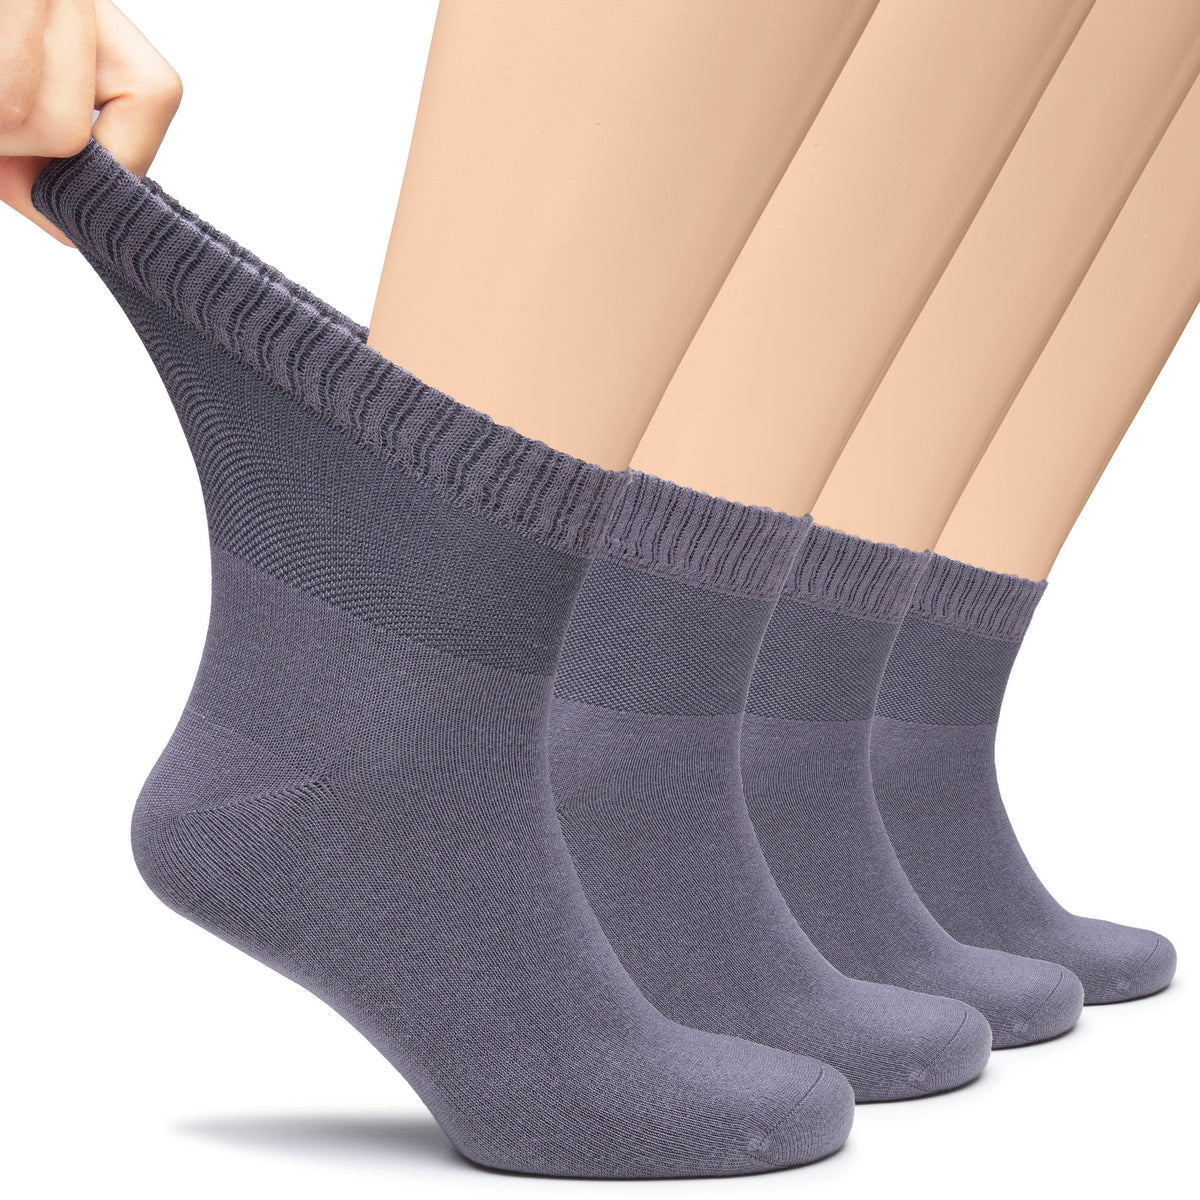 Hugh Ugoli Lightweight Men's Diabetic Ankle Socks Bamboo Thin Socks Seamless Toe and Non-Binding Top, 4 Pairs, Shoe Size 8-11/11-13 | Shoe Size: 11-13 | Dark Brown